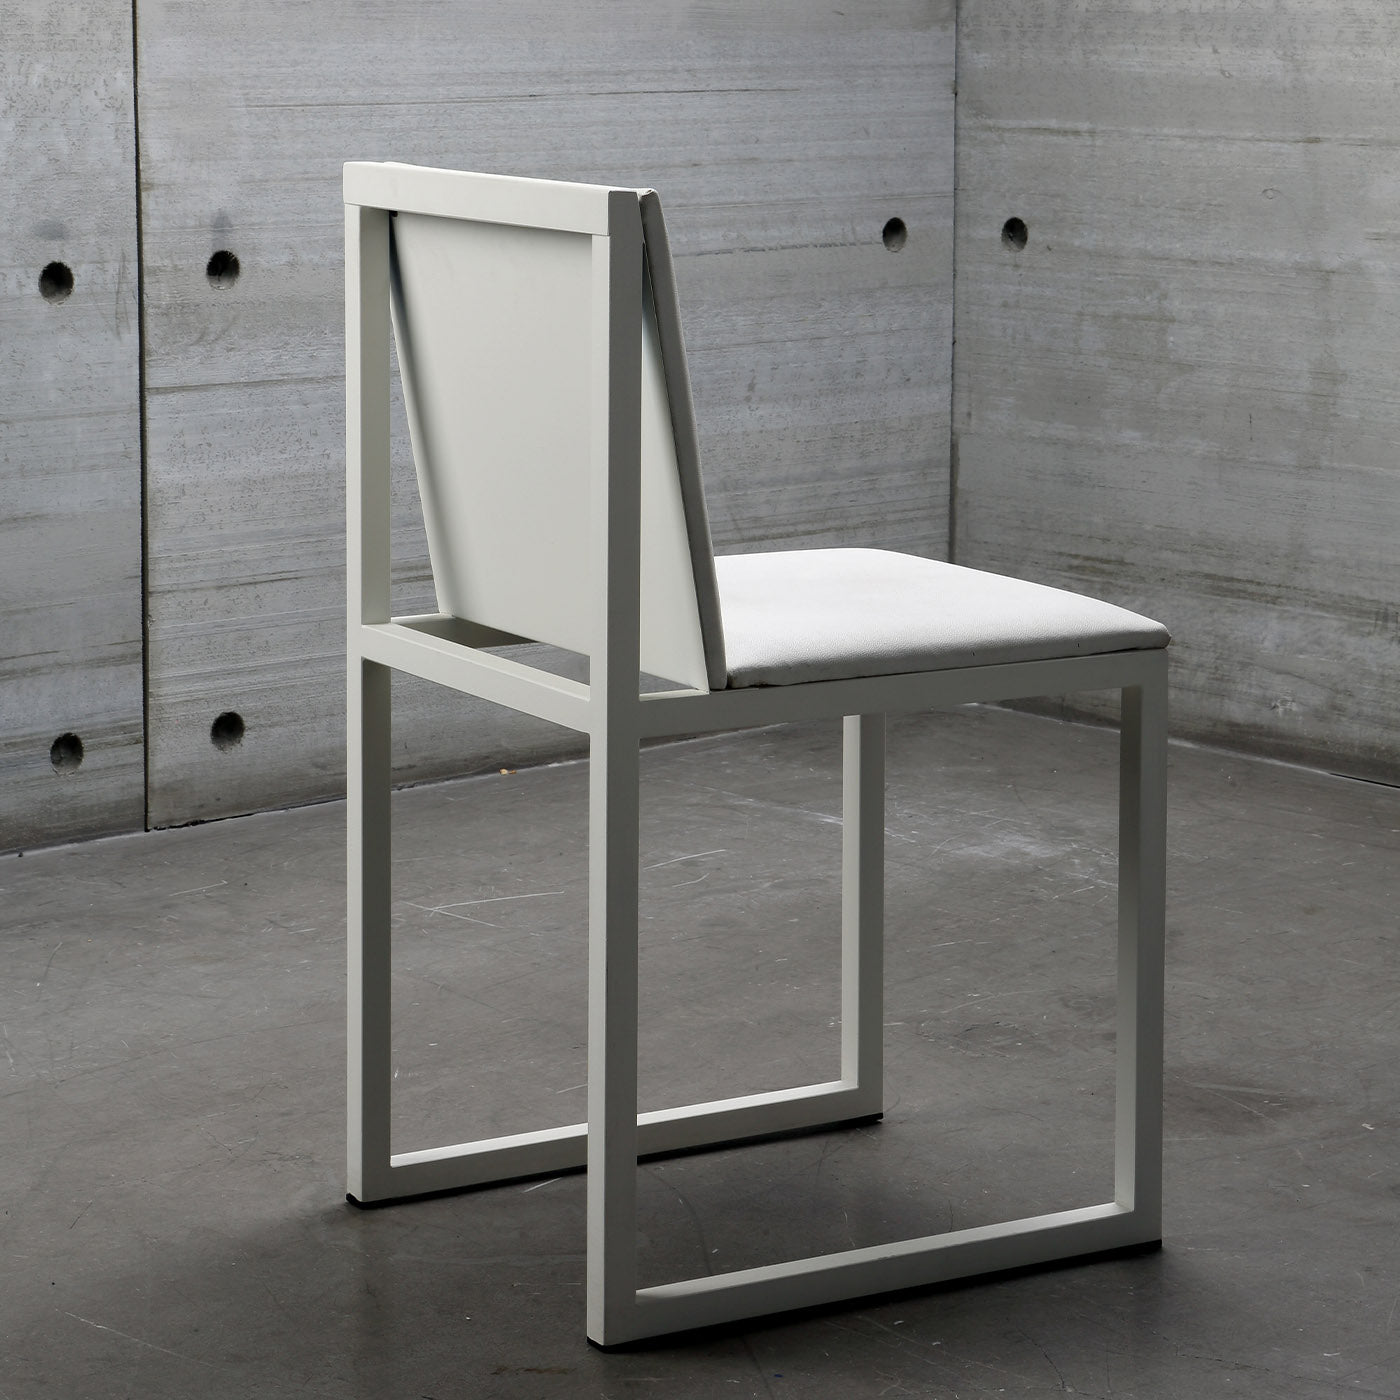 Teresa Soft Set of 2 Chairs by Maurizio Peregalli - Alternative view 2